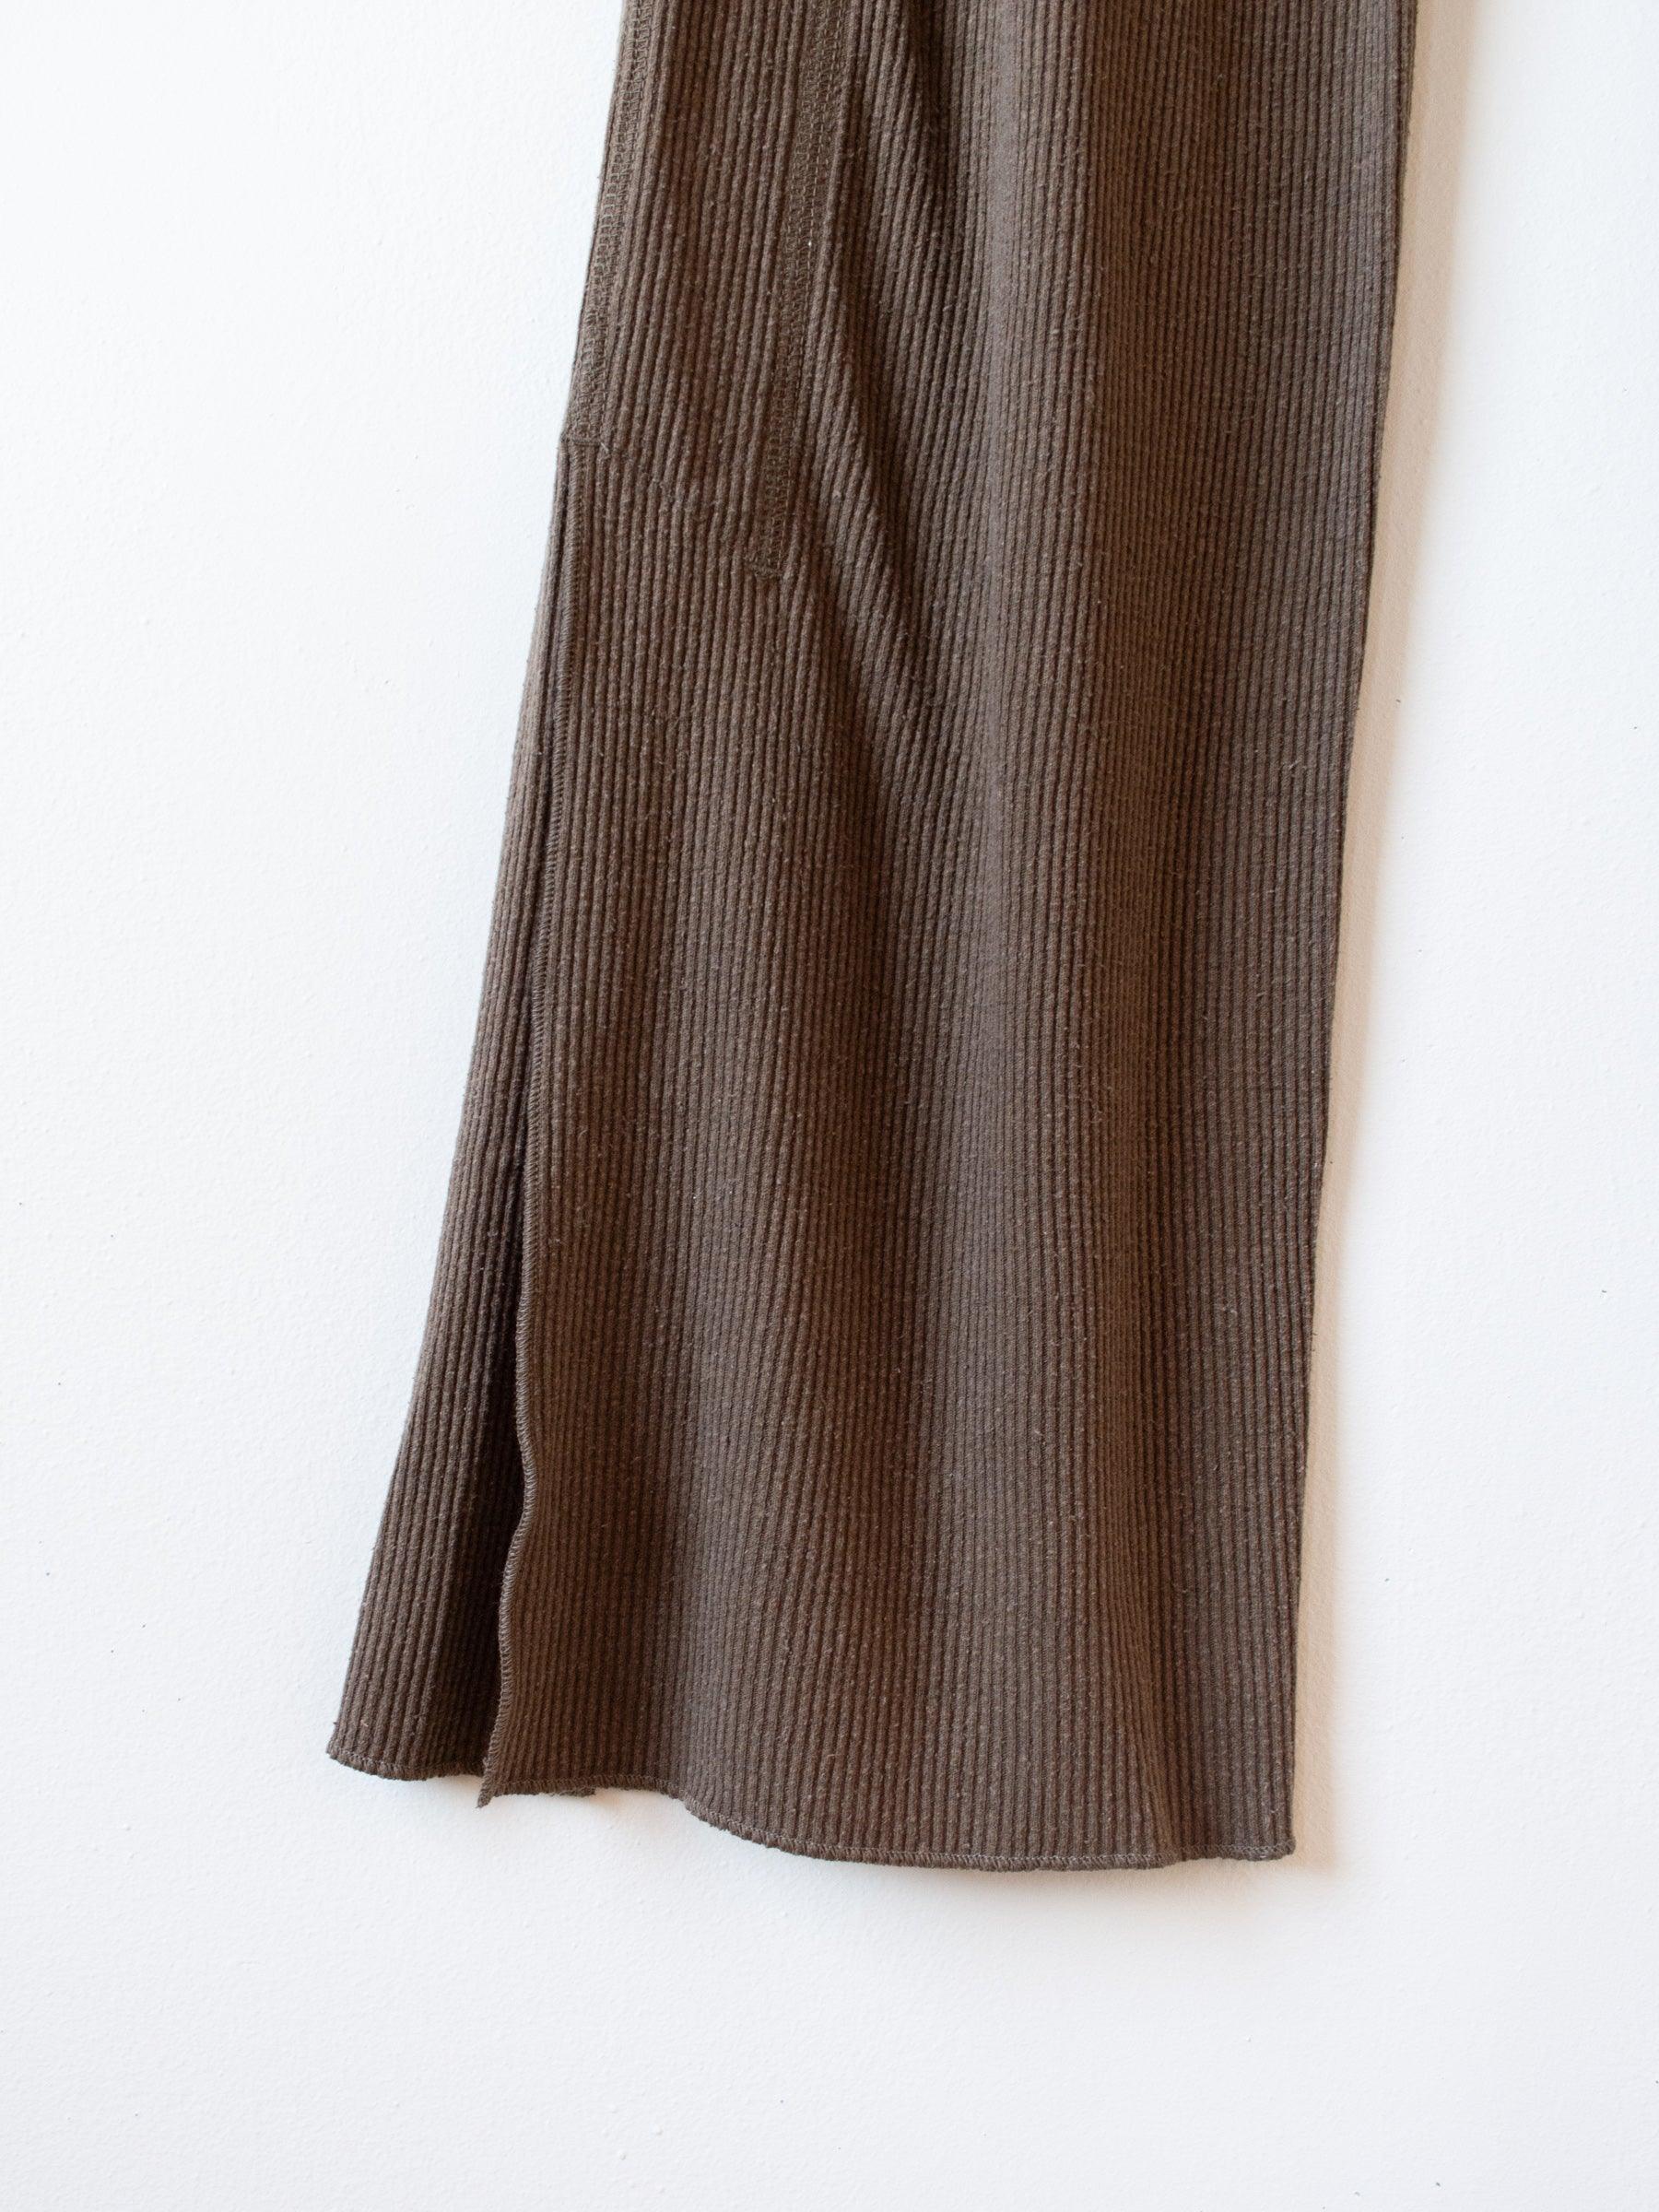 Raw Silk Ribbed Jersey Pants - Coffee Brown